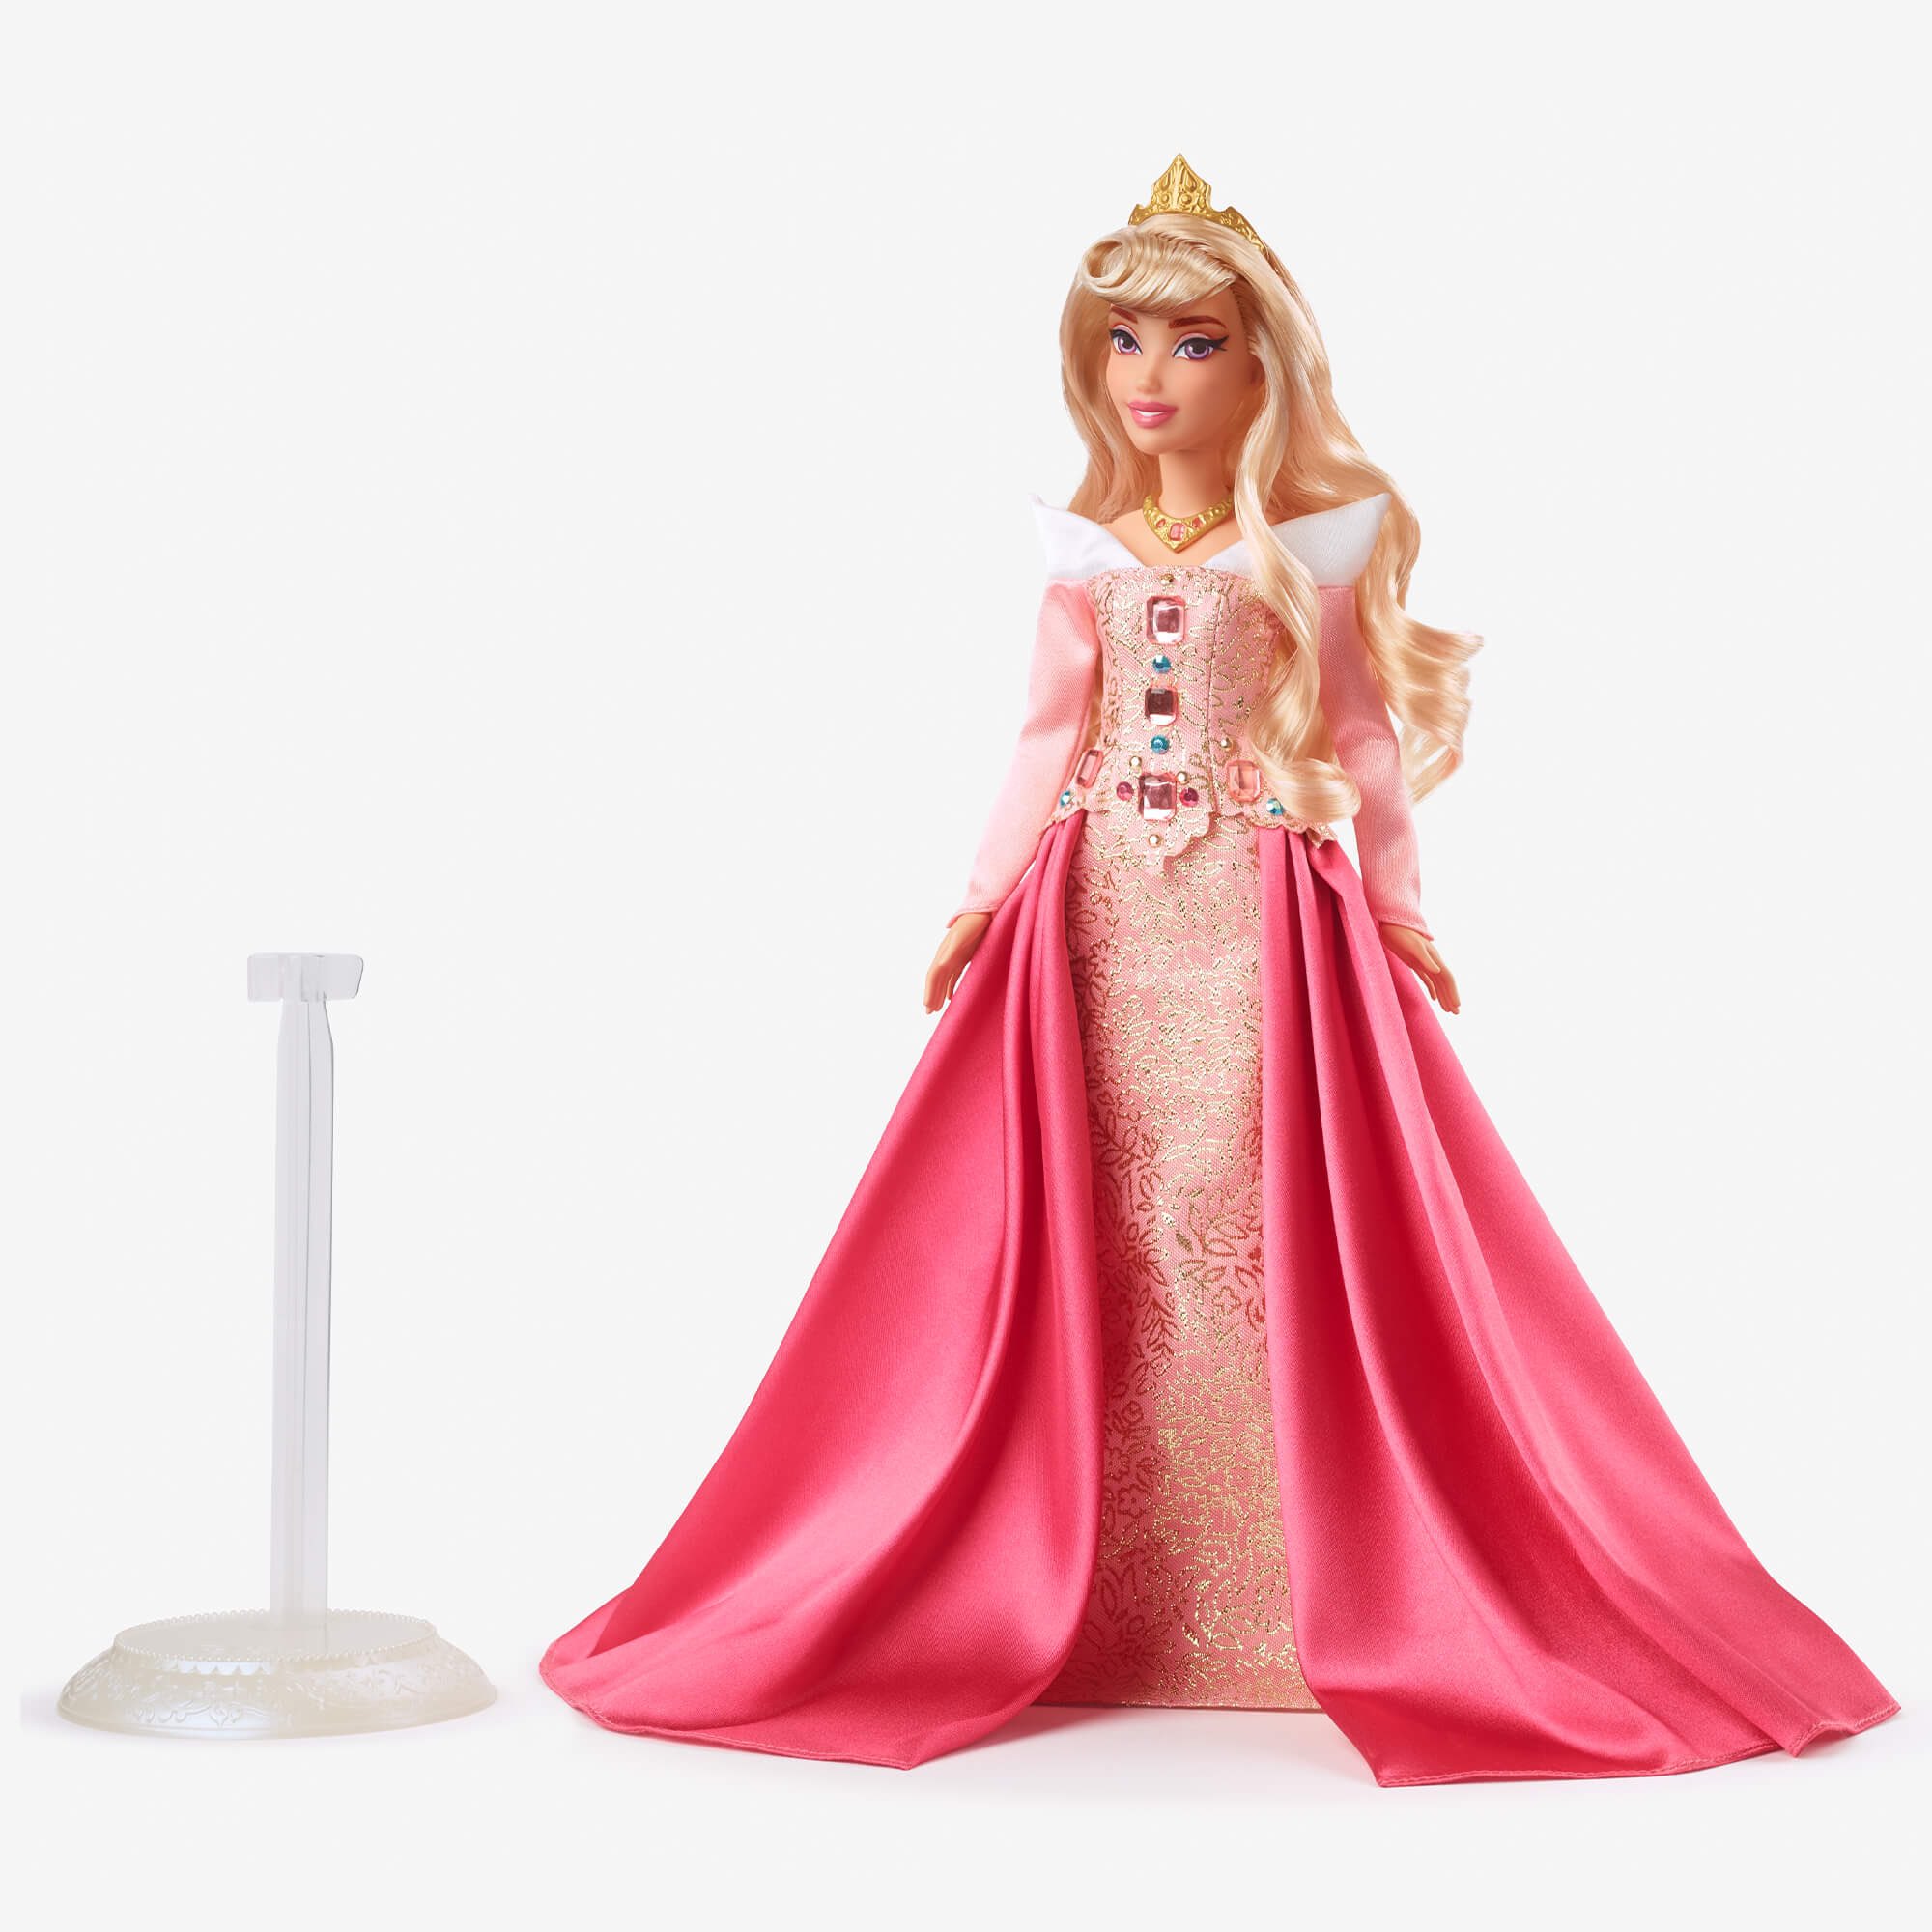 Disney Princesse Royal Radiance Collection Set Poupée Jouet Neuf avec Boite